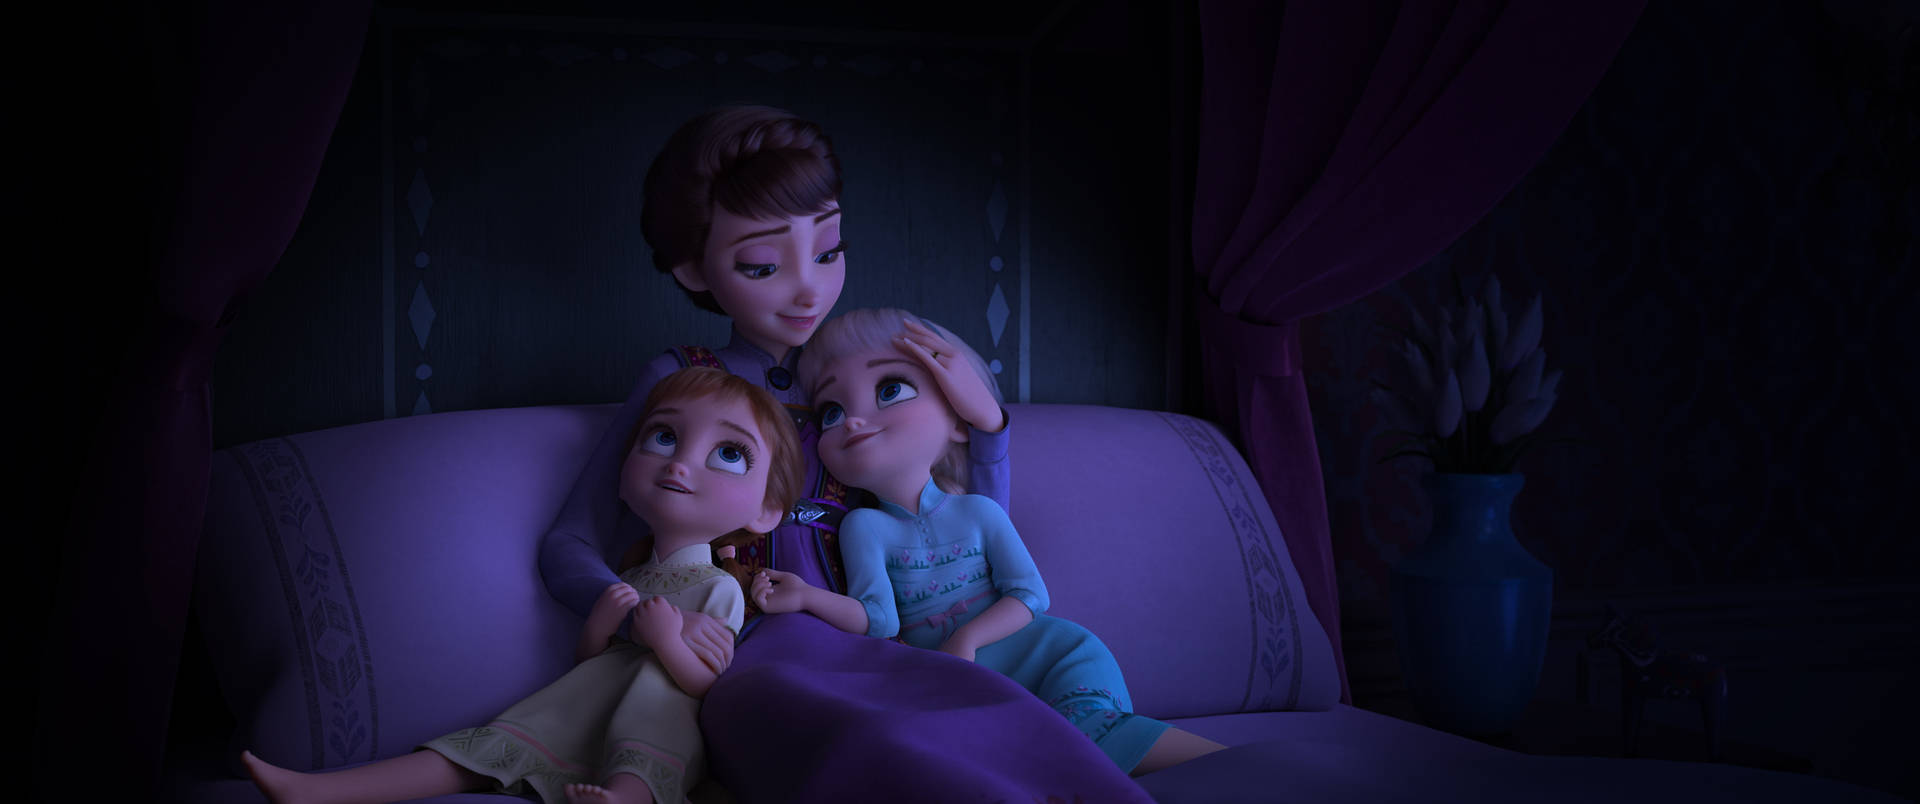 A Heartwarming Moment Between Elsa, Anna, And Their Mother Iduna Background